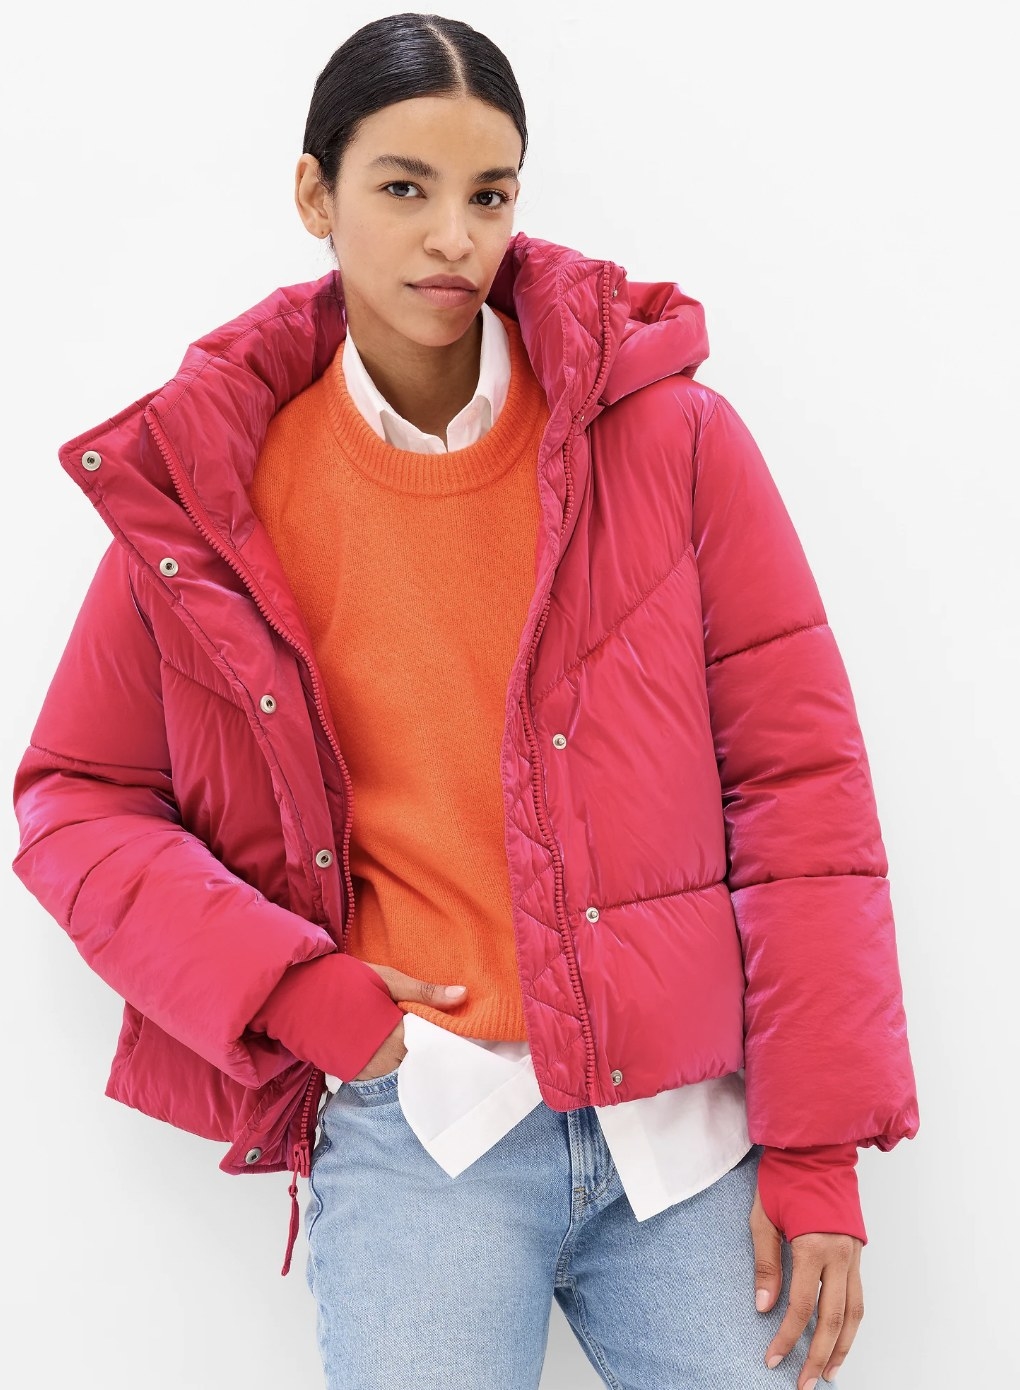 Model in the pink coat